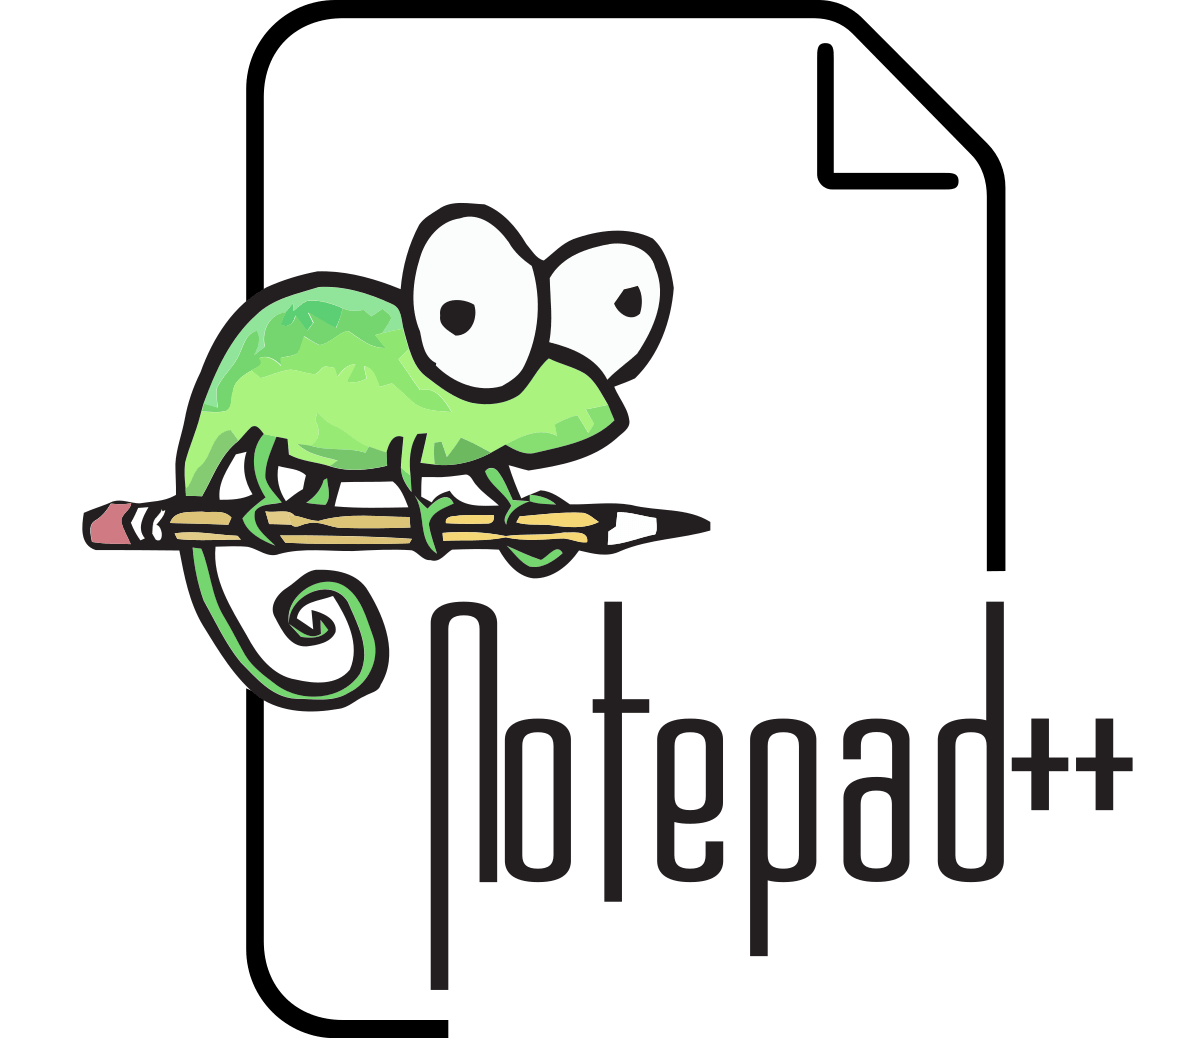 Notepad++ 8.2.1 (64-bit) Crack + Keygen Latest{2022}